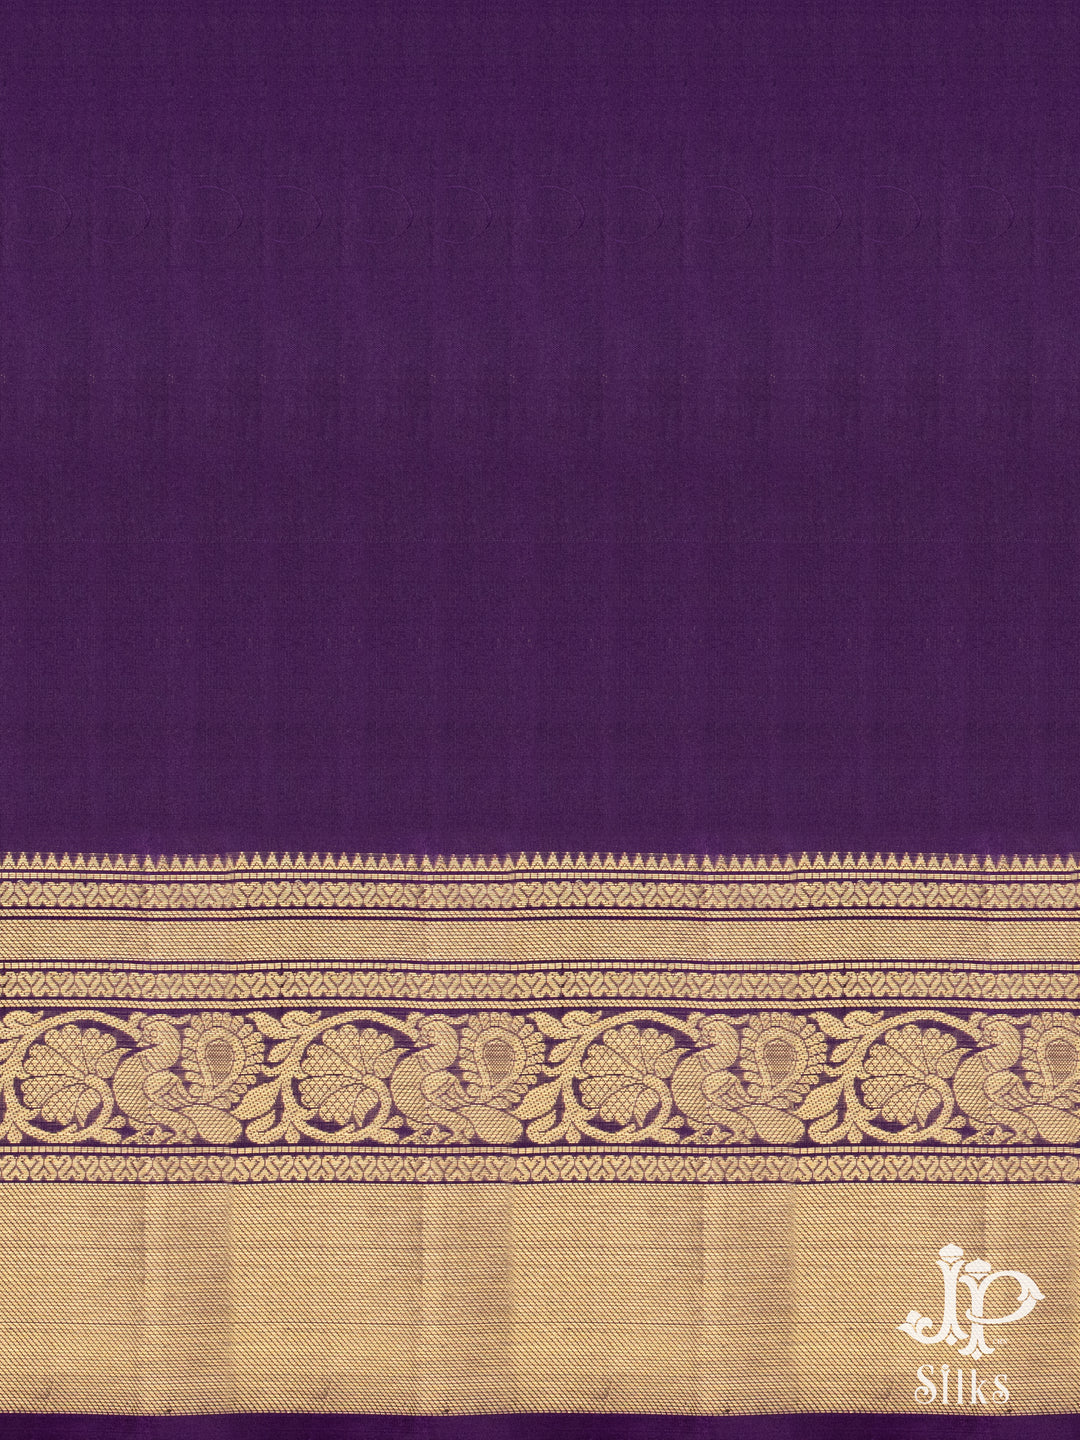 Lilac and Purple Soft SIlk Saree - D5994 - view 2